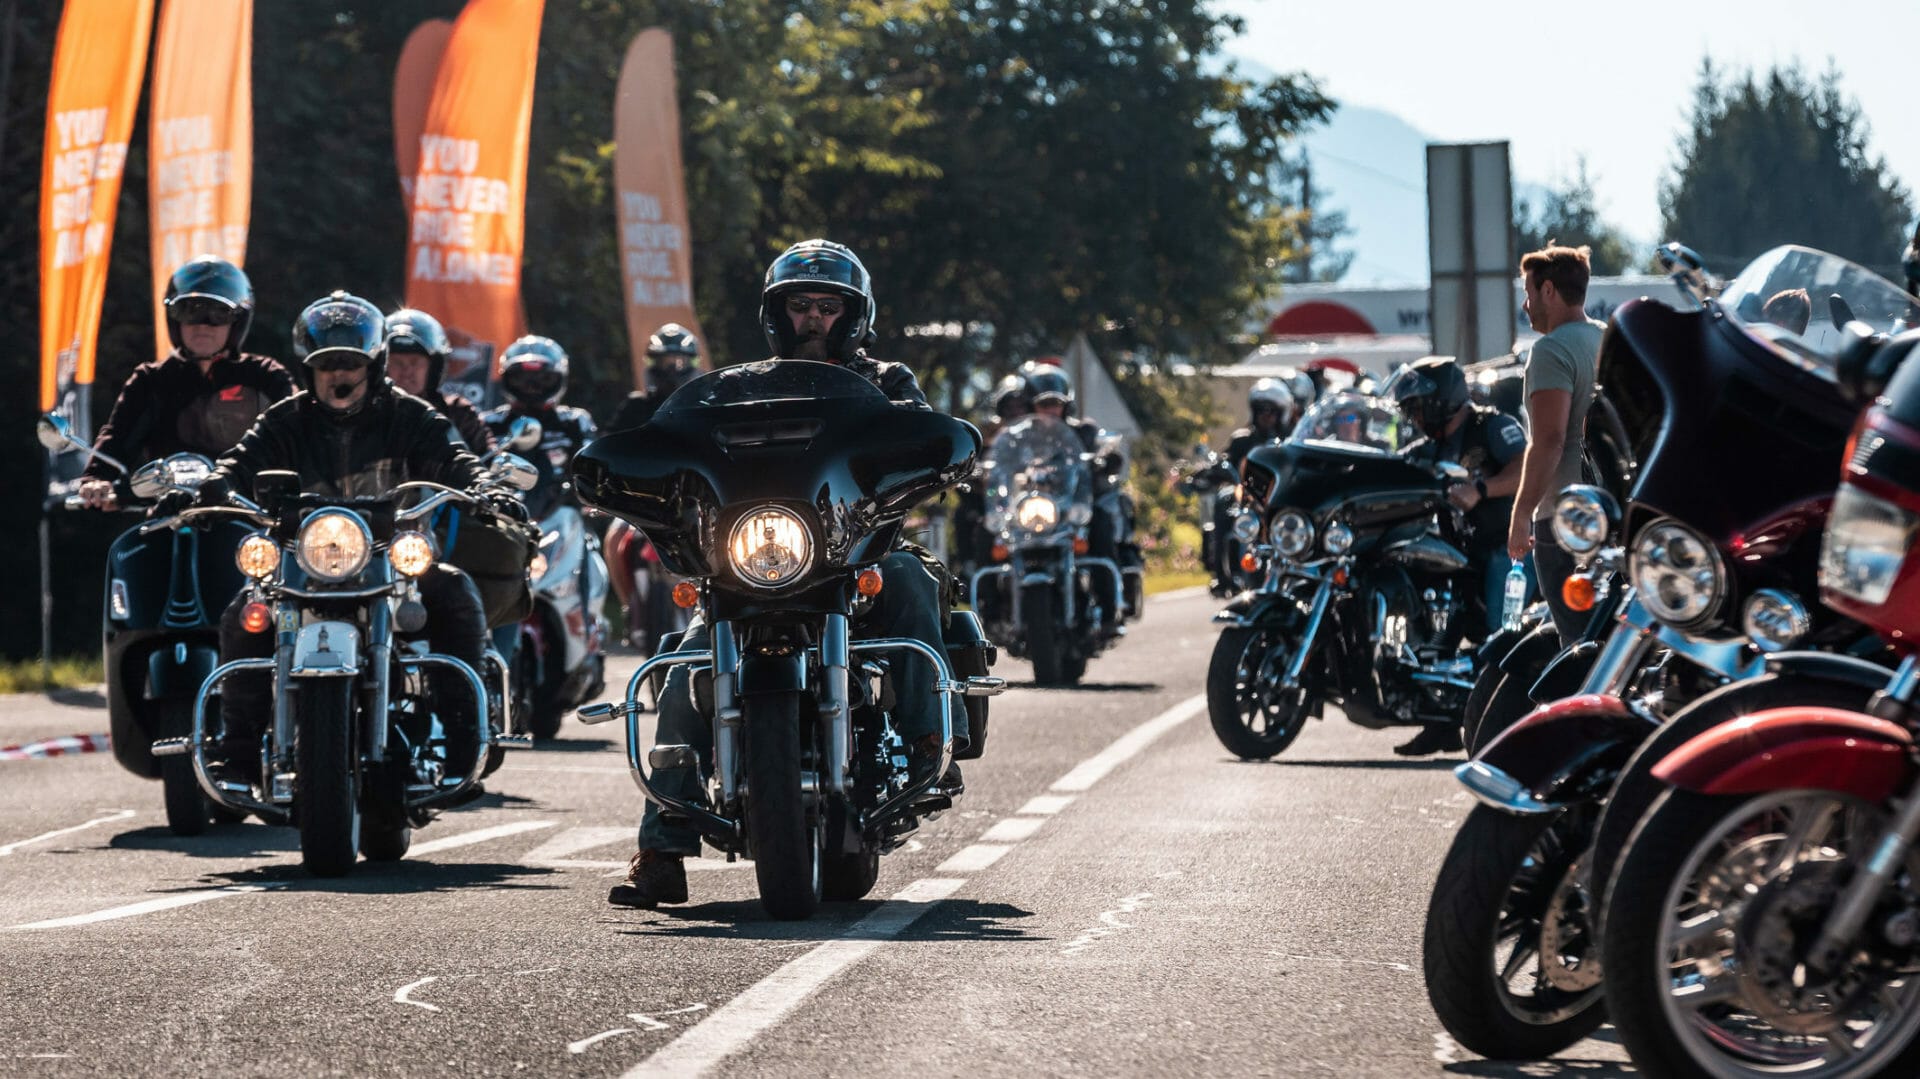 More than 120,000 motorcycle fans at the European Bike Week